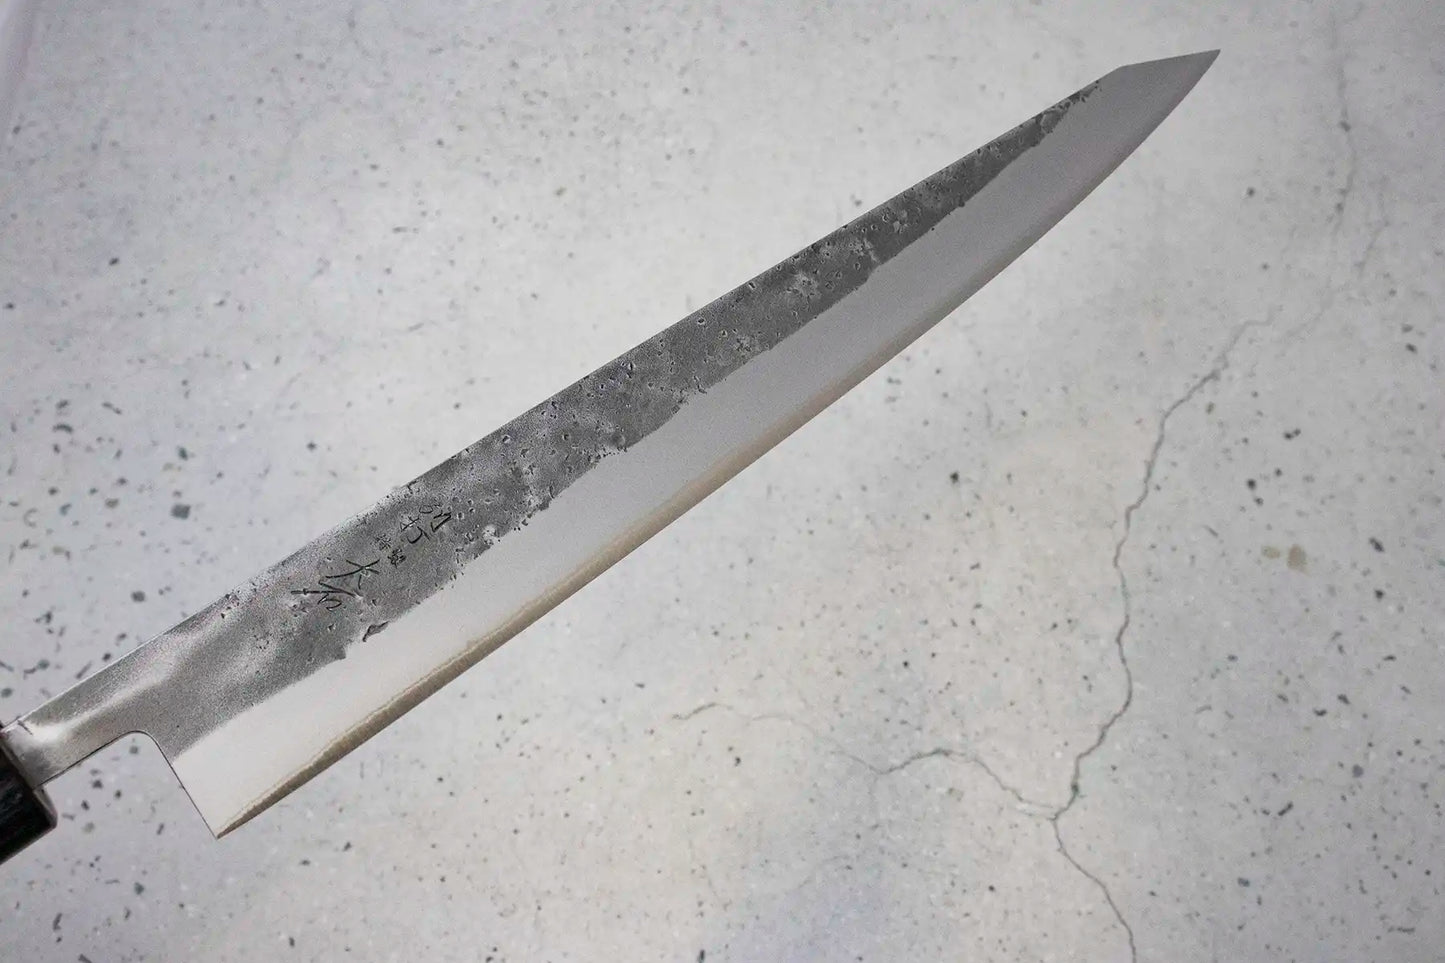 Ohishi Sujihiki (Carving Knife) Blue Steel #2 Nashiji, 270mm